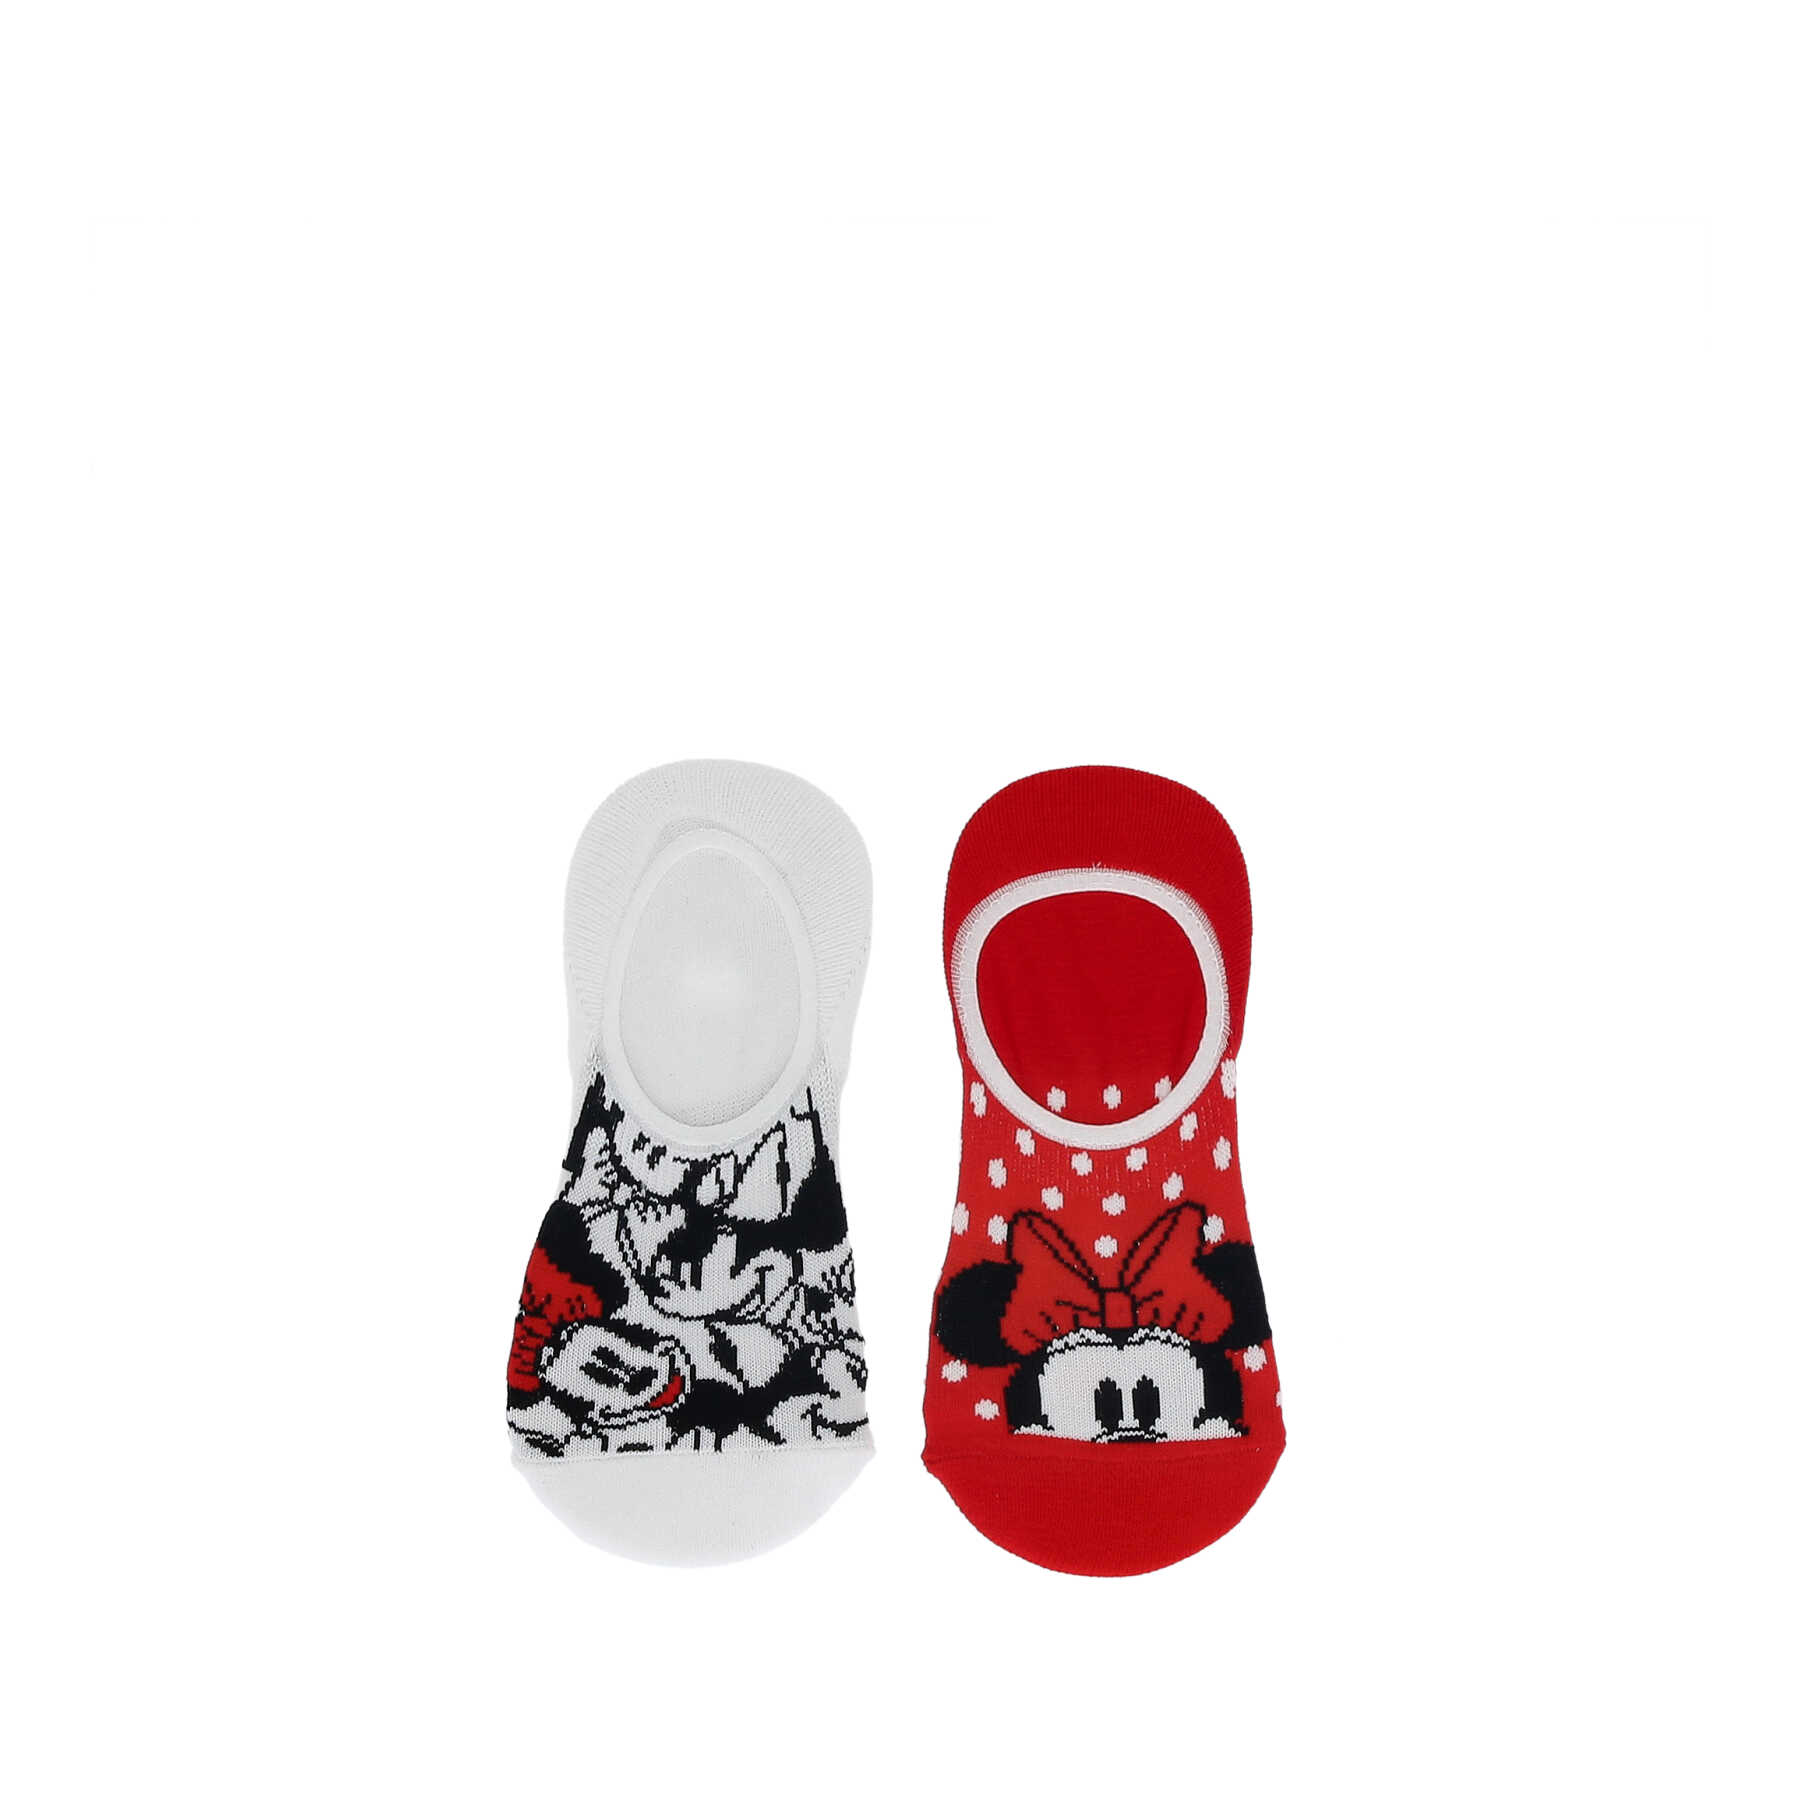 Dívčí ponožky Minnie do tenisek sneakers - 2-pack - bílé a červené